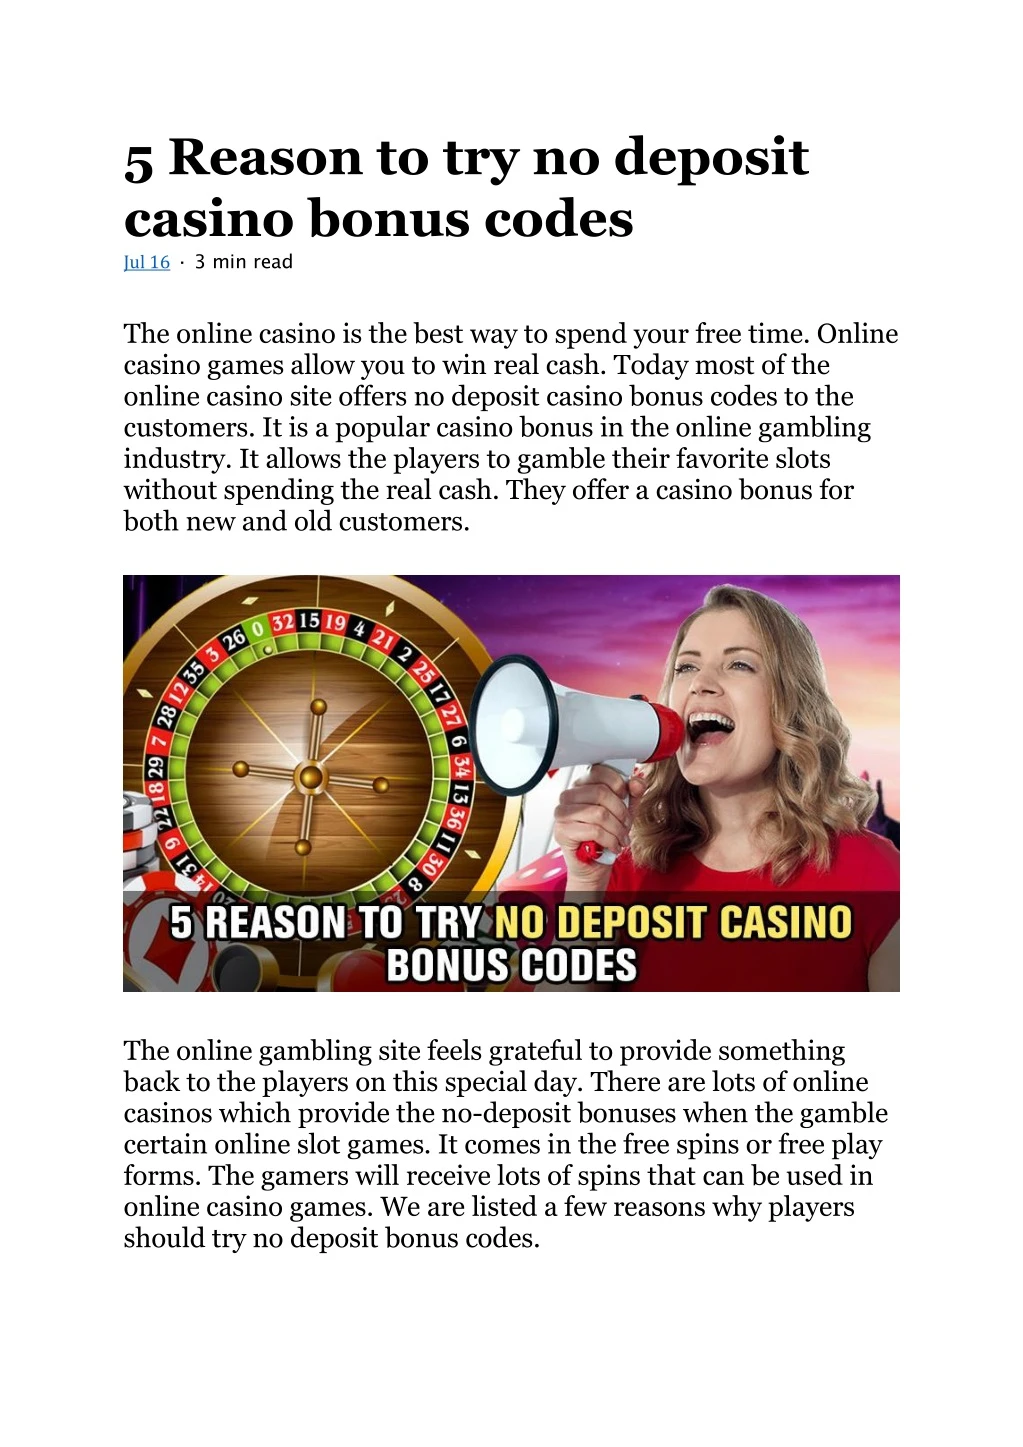 5 reason to try no deposit casino bonus codes